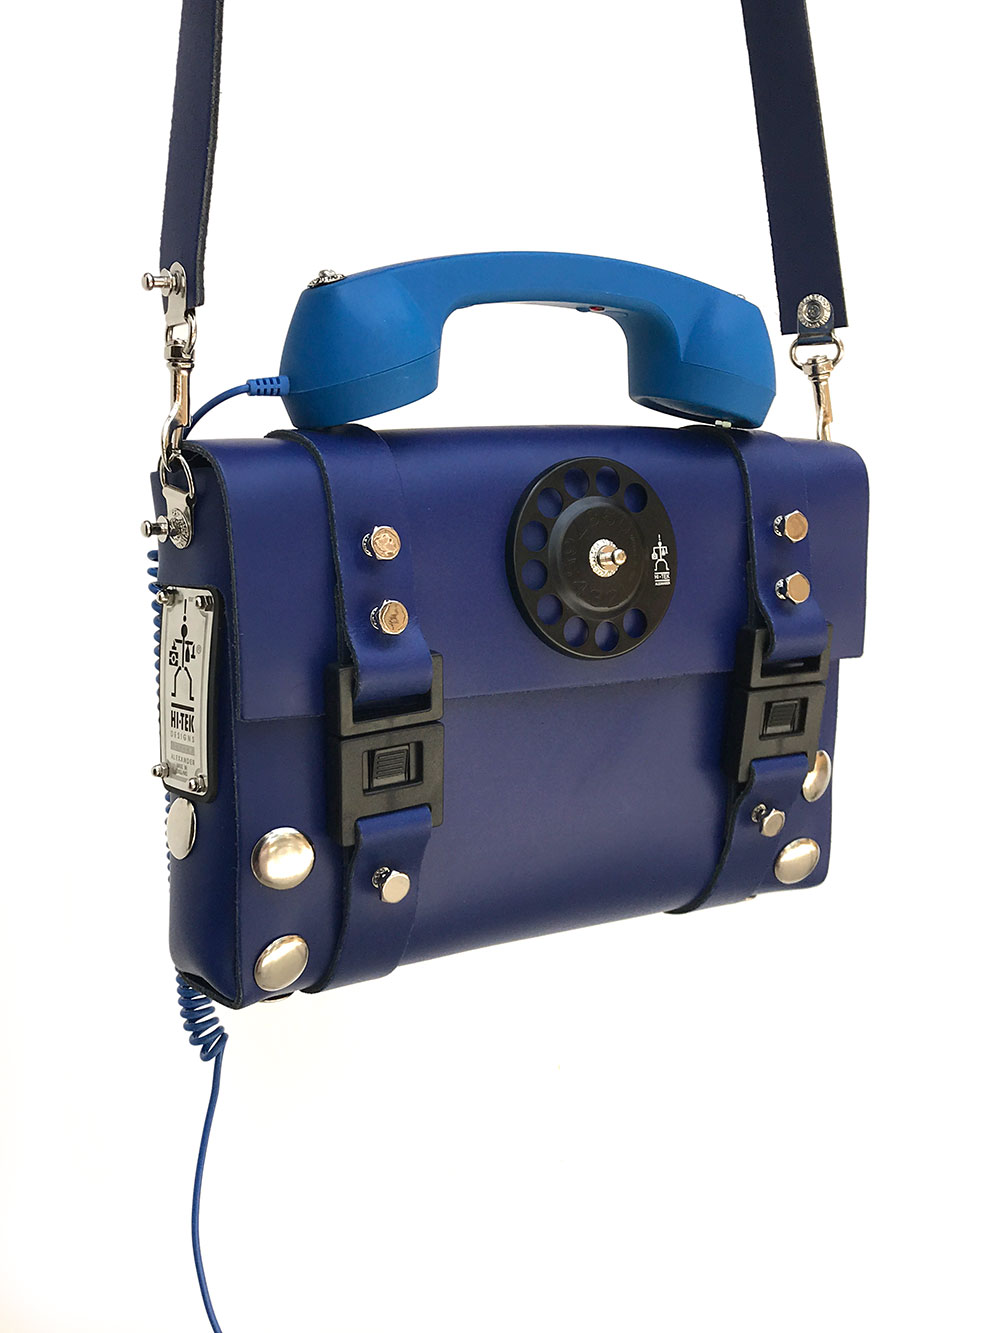 blue leather shoulder bag handbag with retro telephone receiver handle  unusual unique